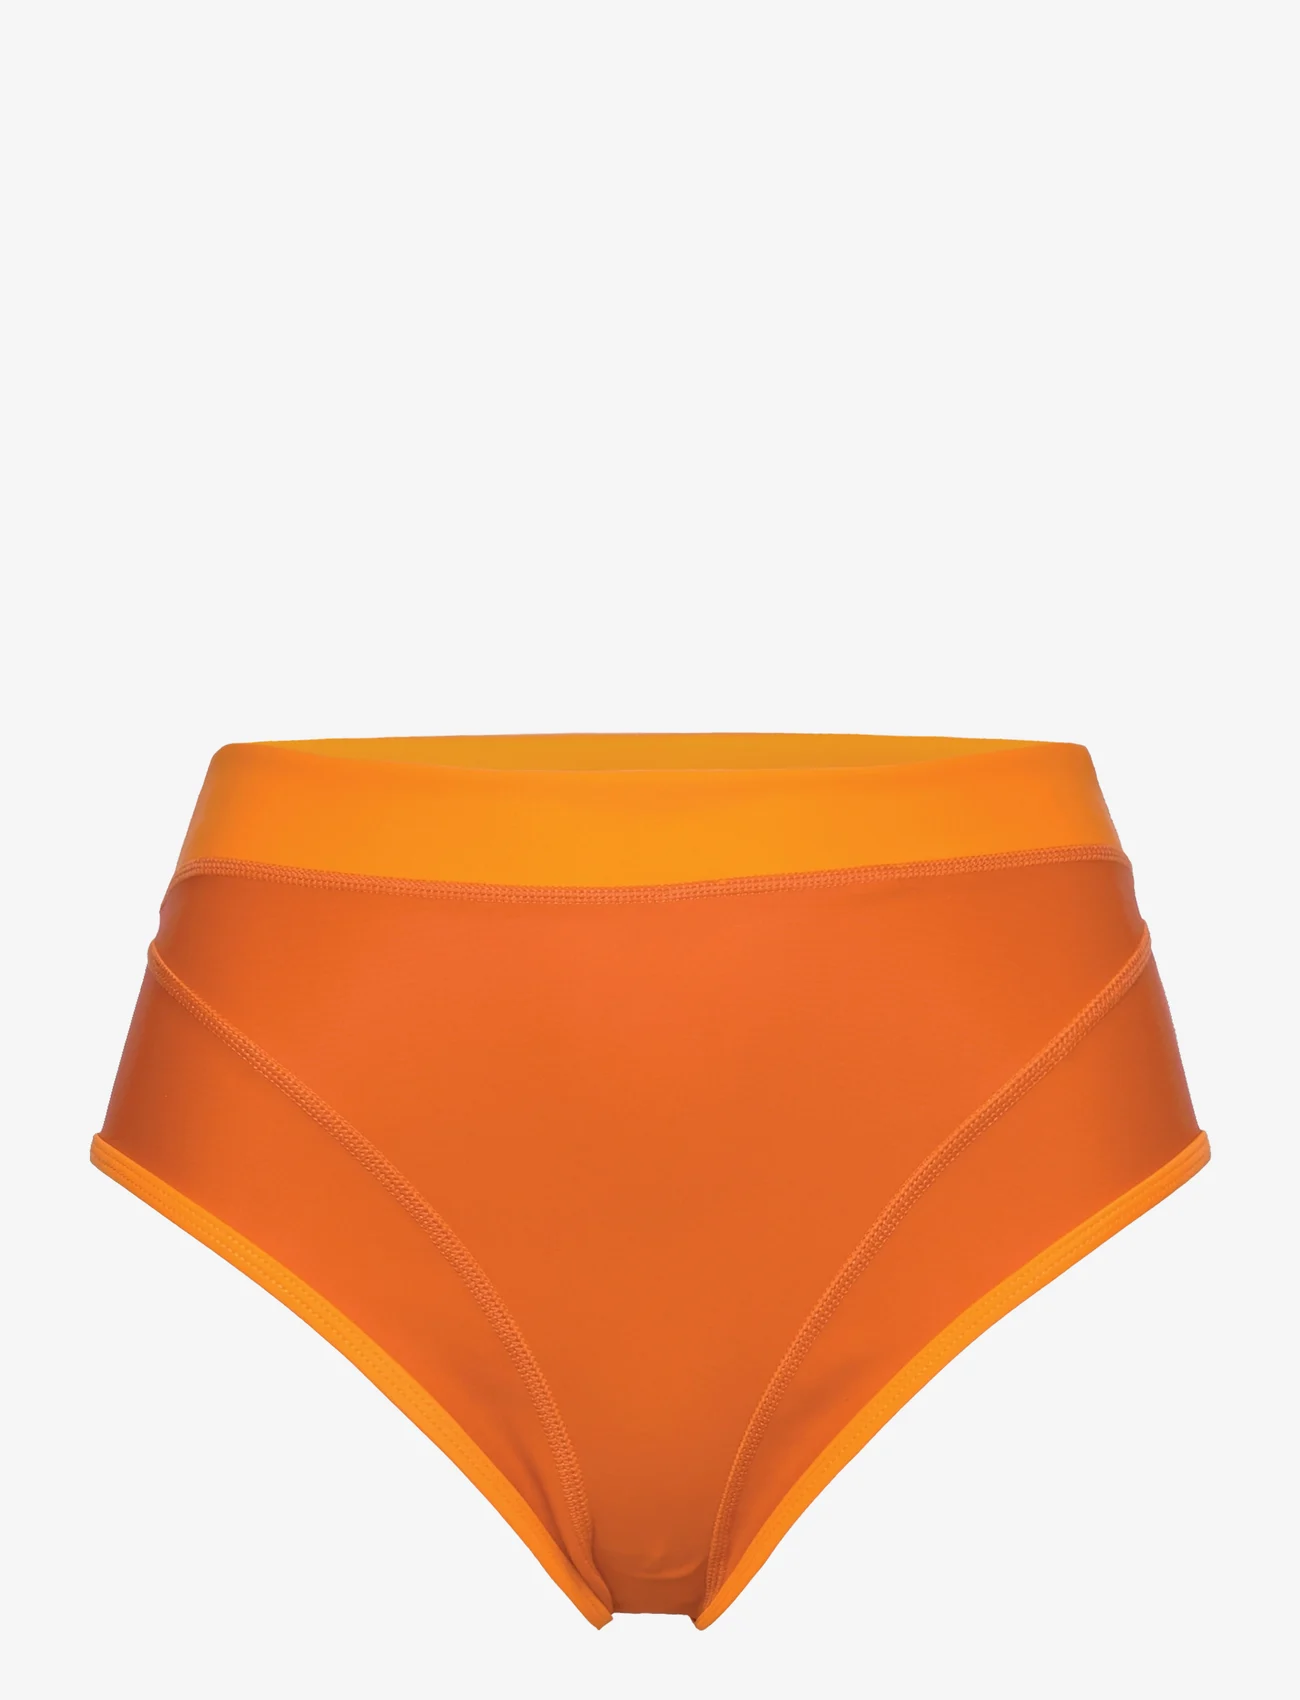 Rip Curl - MIRAGE PEEPS HIGH LEG - bikinitrosor med hög midja - orange - 0